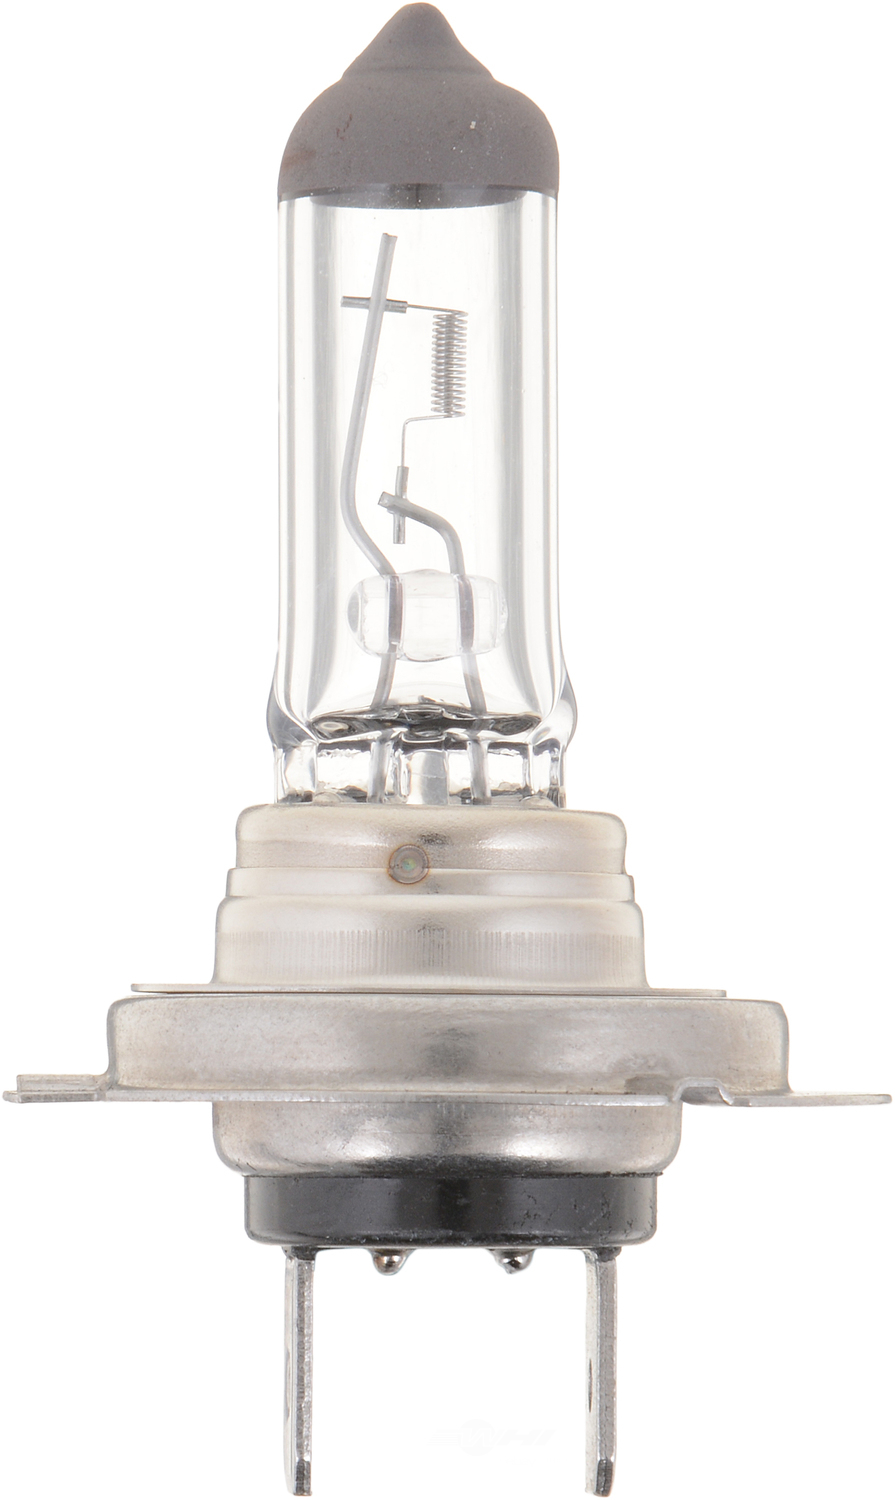 PHILIPS LIGHTING COMPANY - Standard - Twin Blister Pack Cornering Light Bulb - PLP H7B2